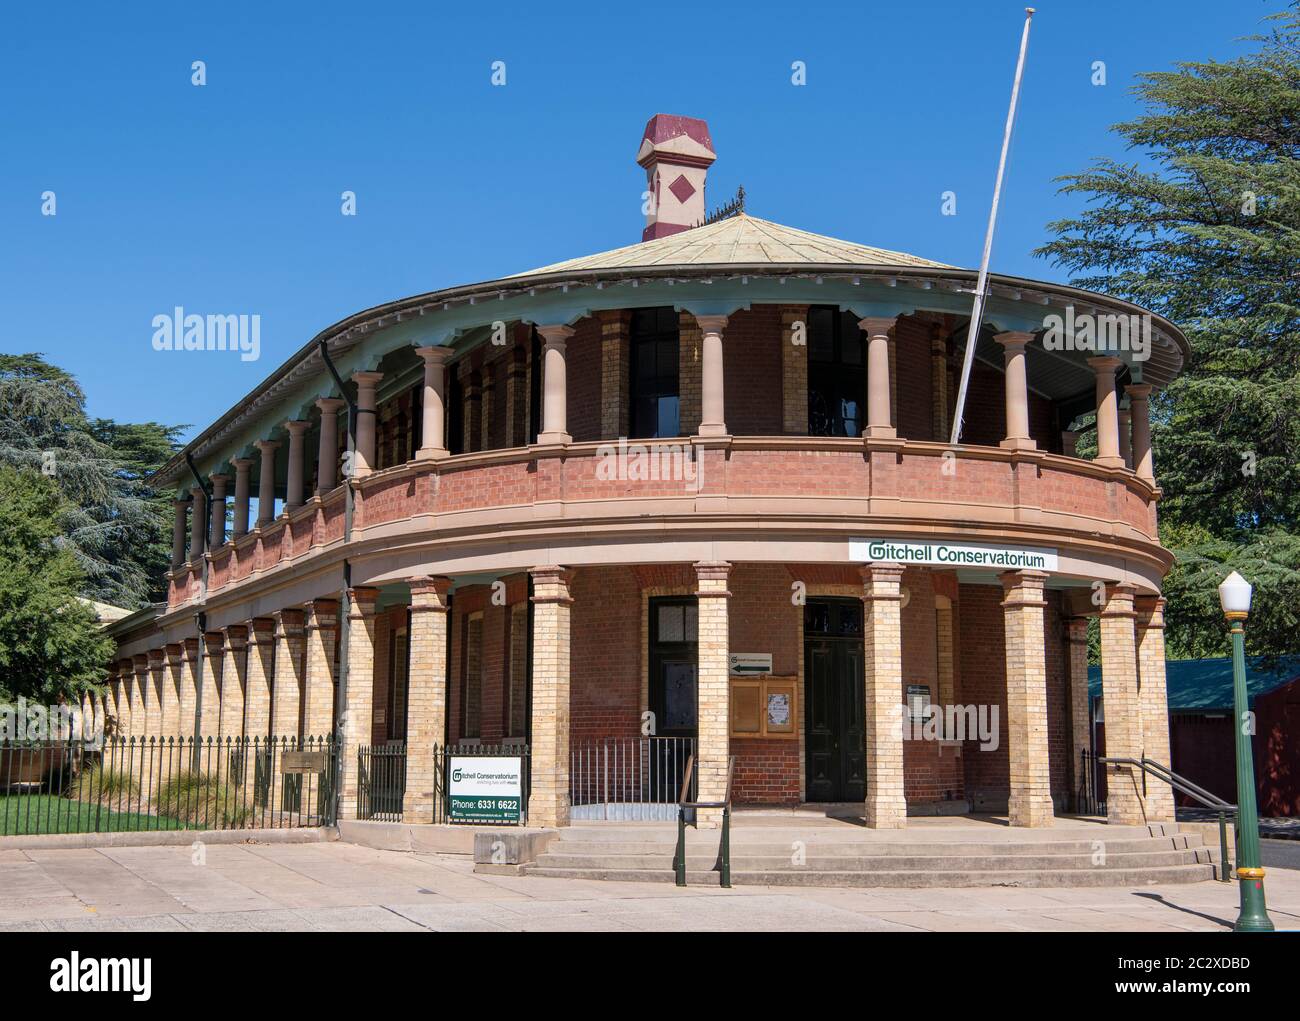 Mitchell Conservatorium Bathurst NSW Australia Stock Photo